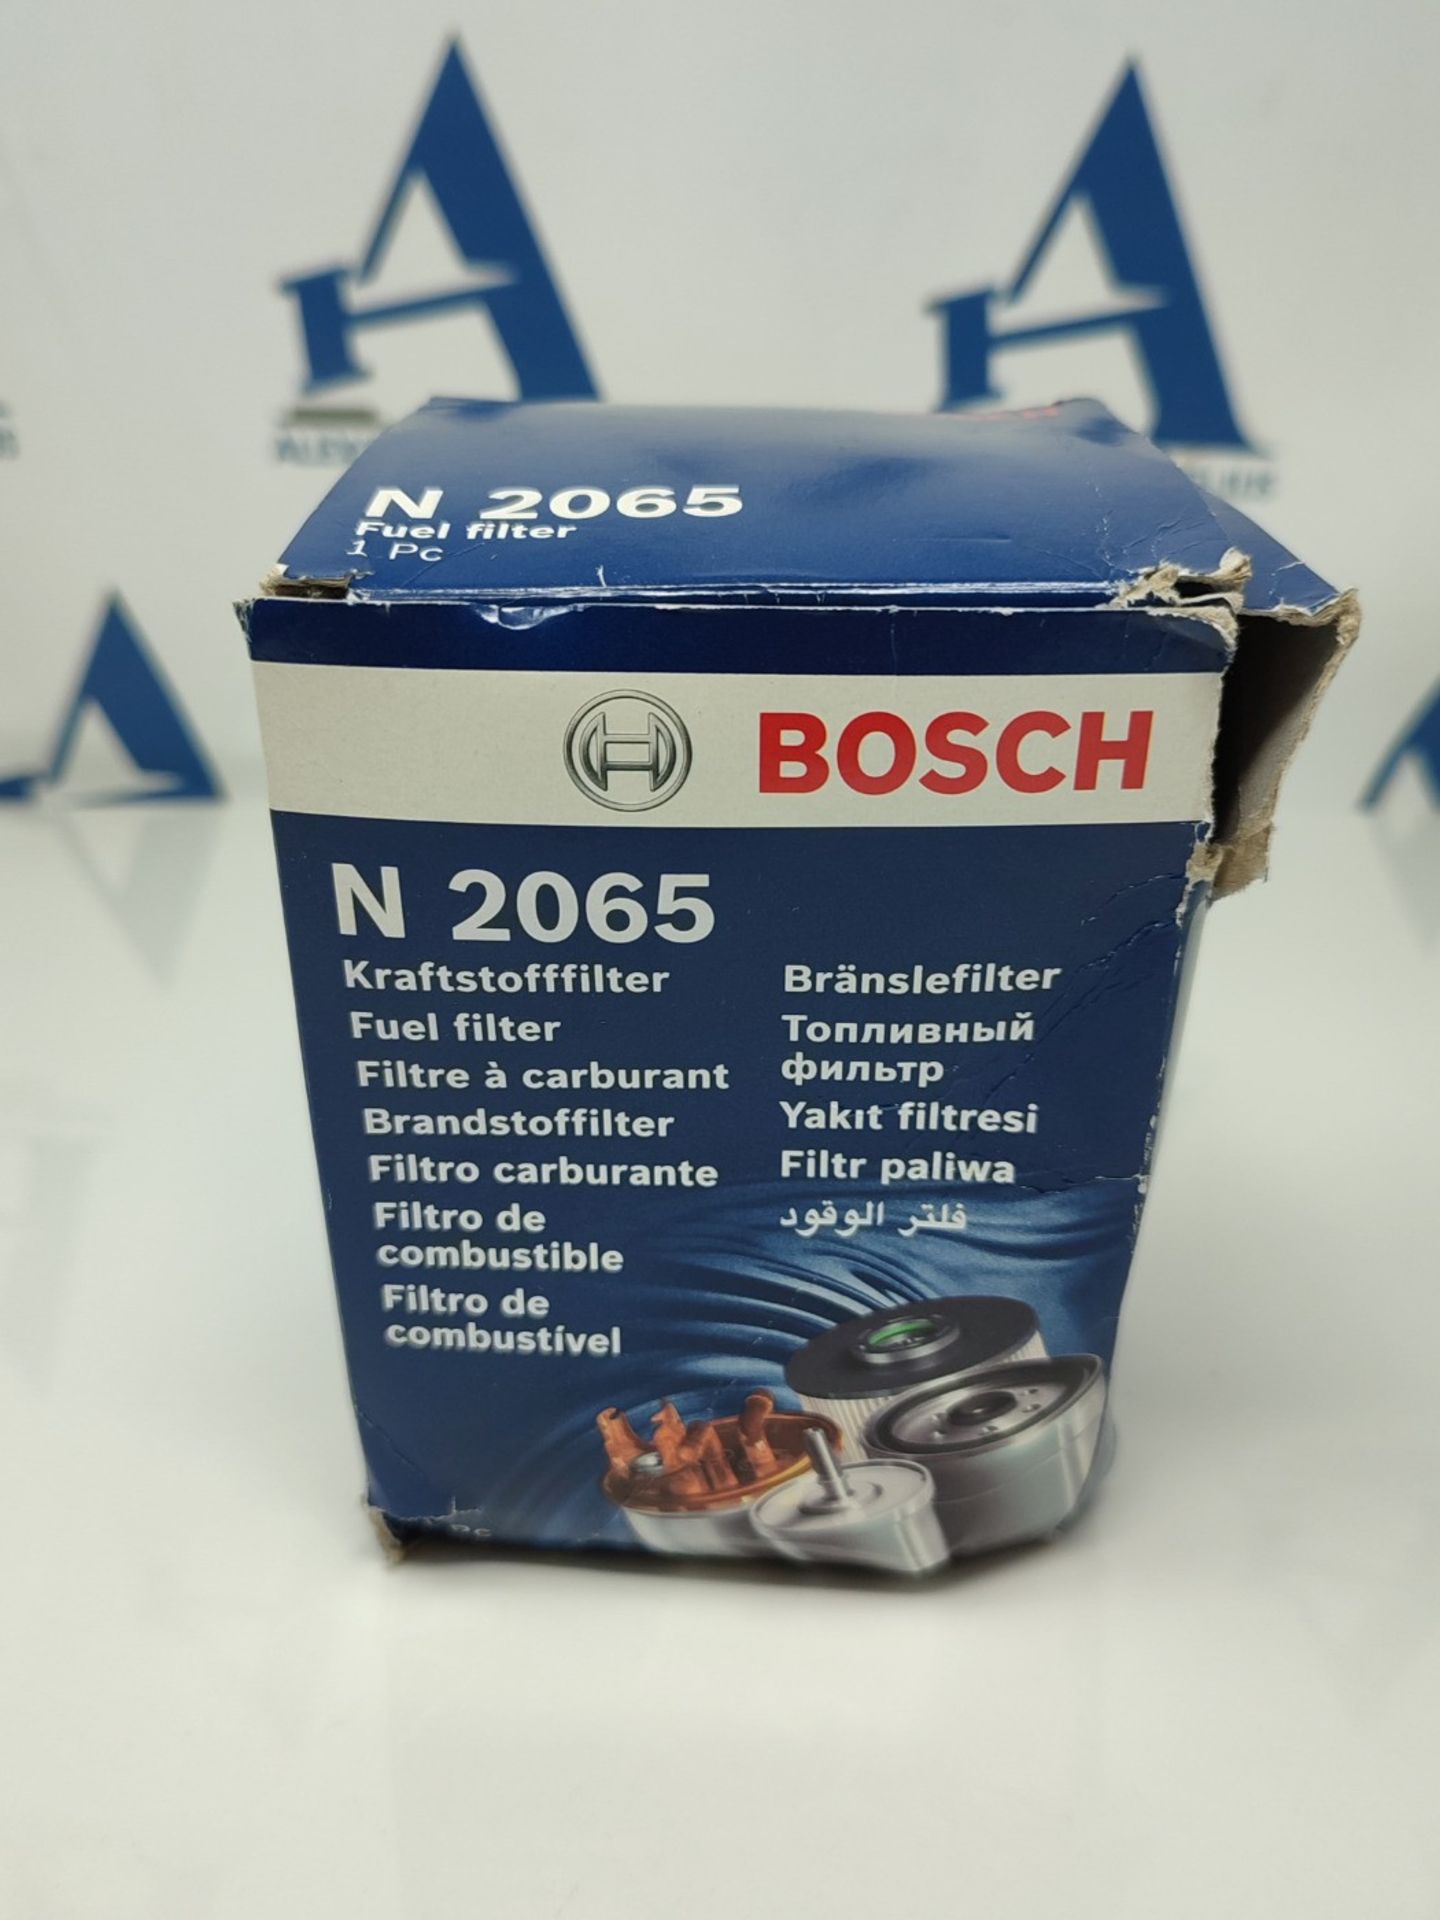 Bosch N2065 - Diesel Filter for Cars - Image 2 of 3